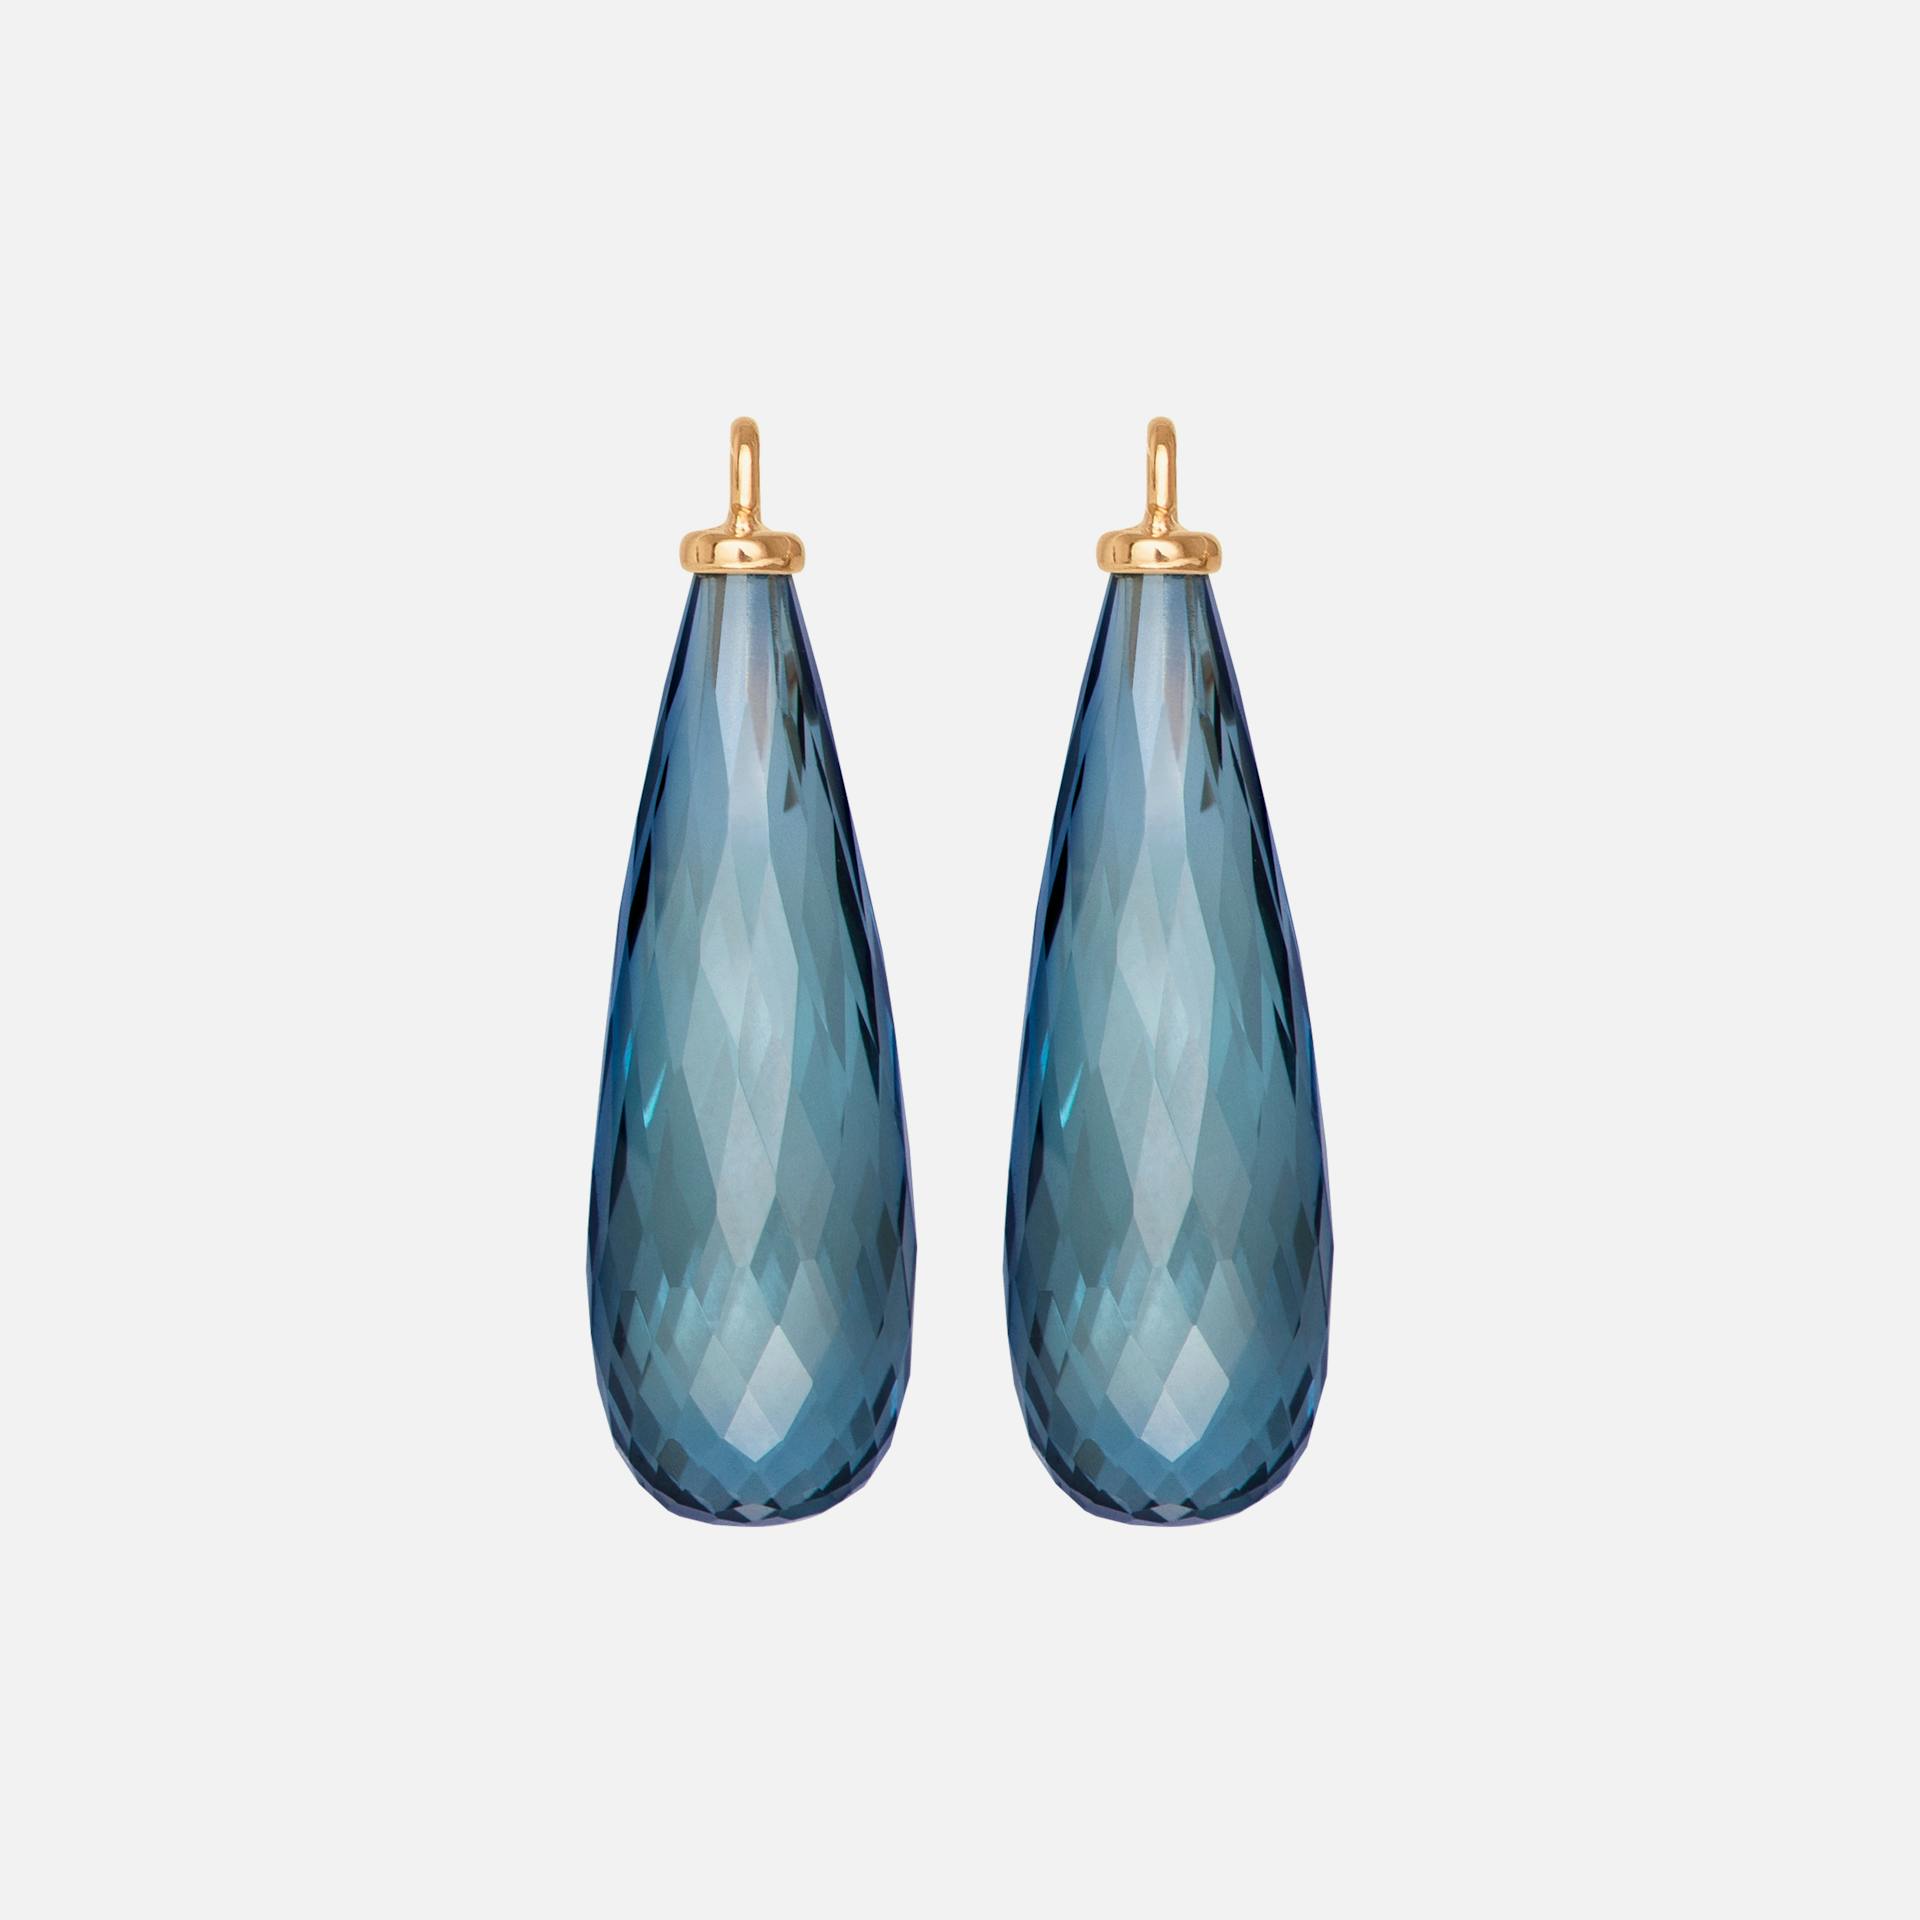 Earring pendant drop 18k gold with London blue topaz